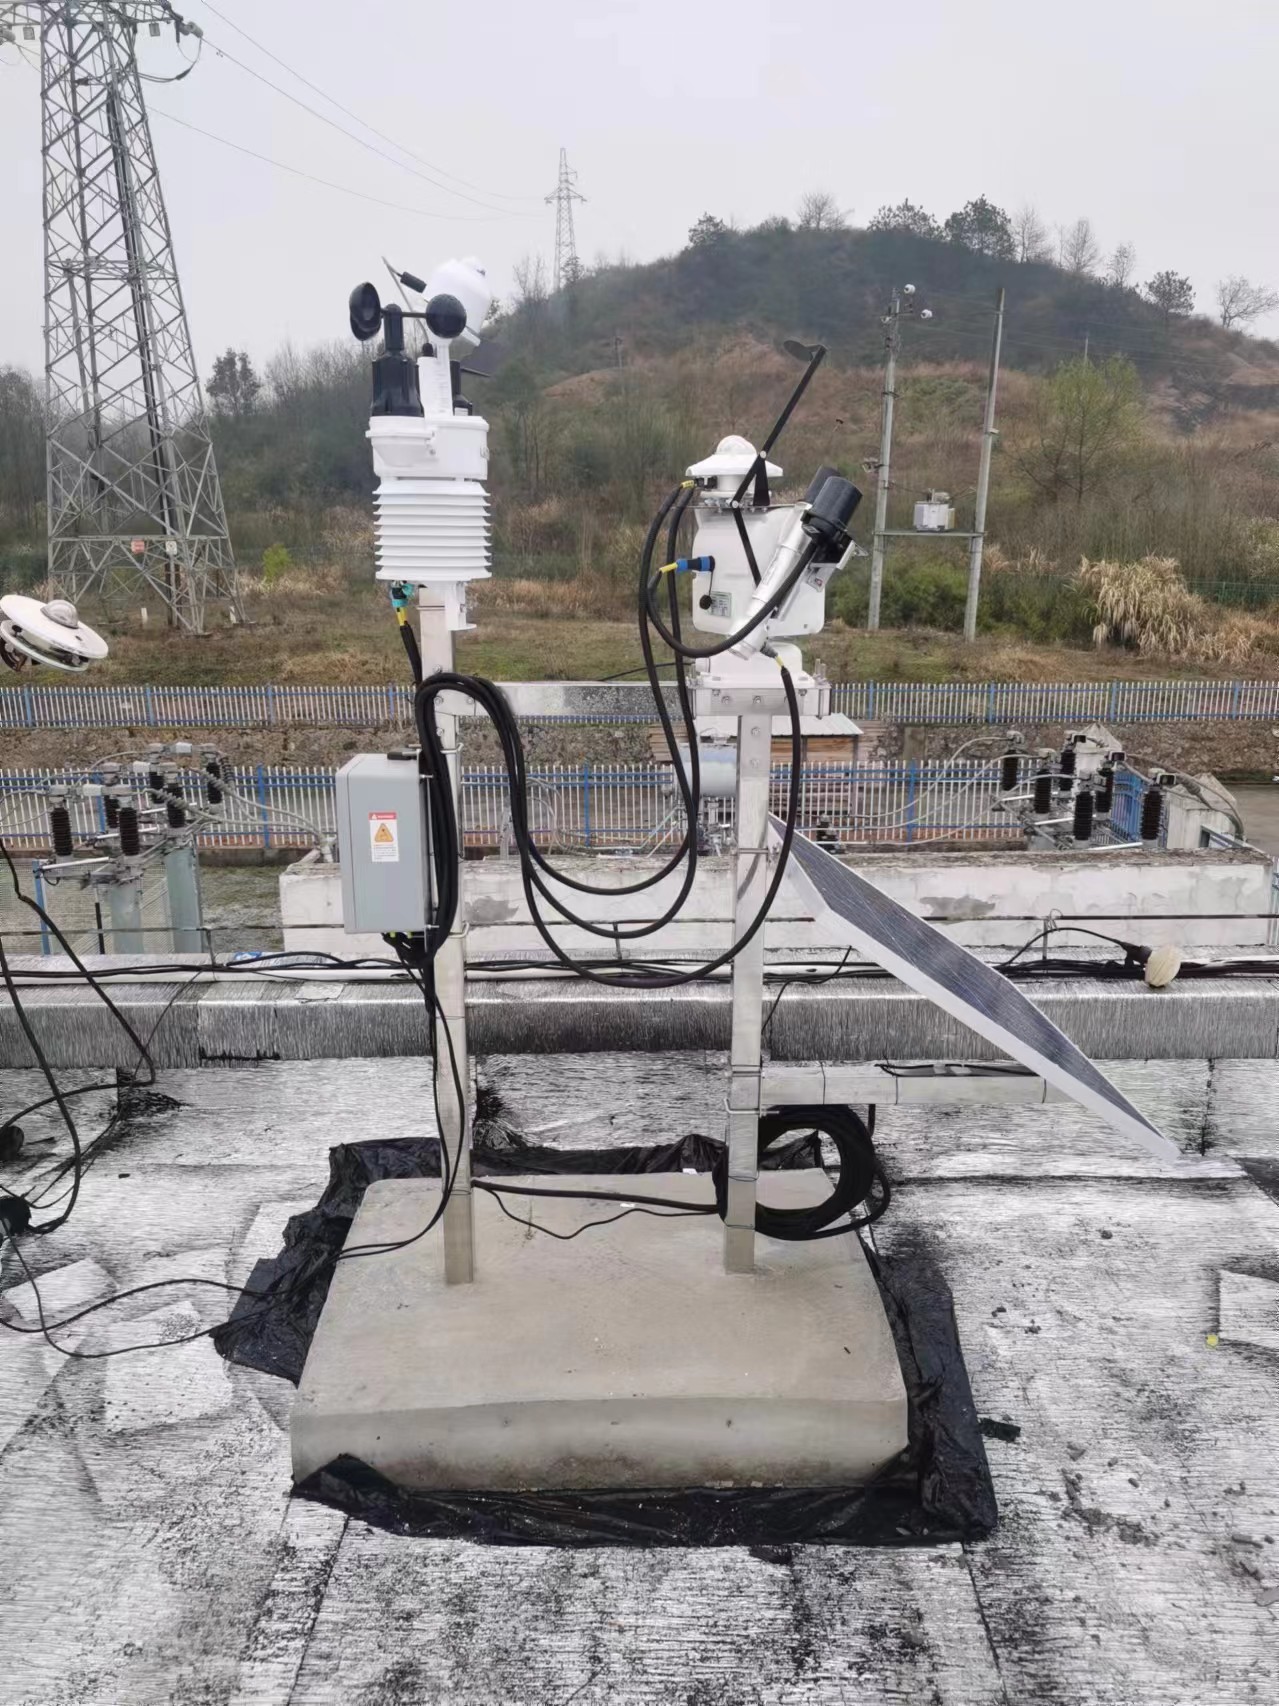 HGQ-TH1型太阳能发电环境监测系统